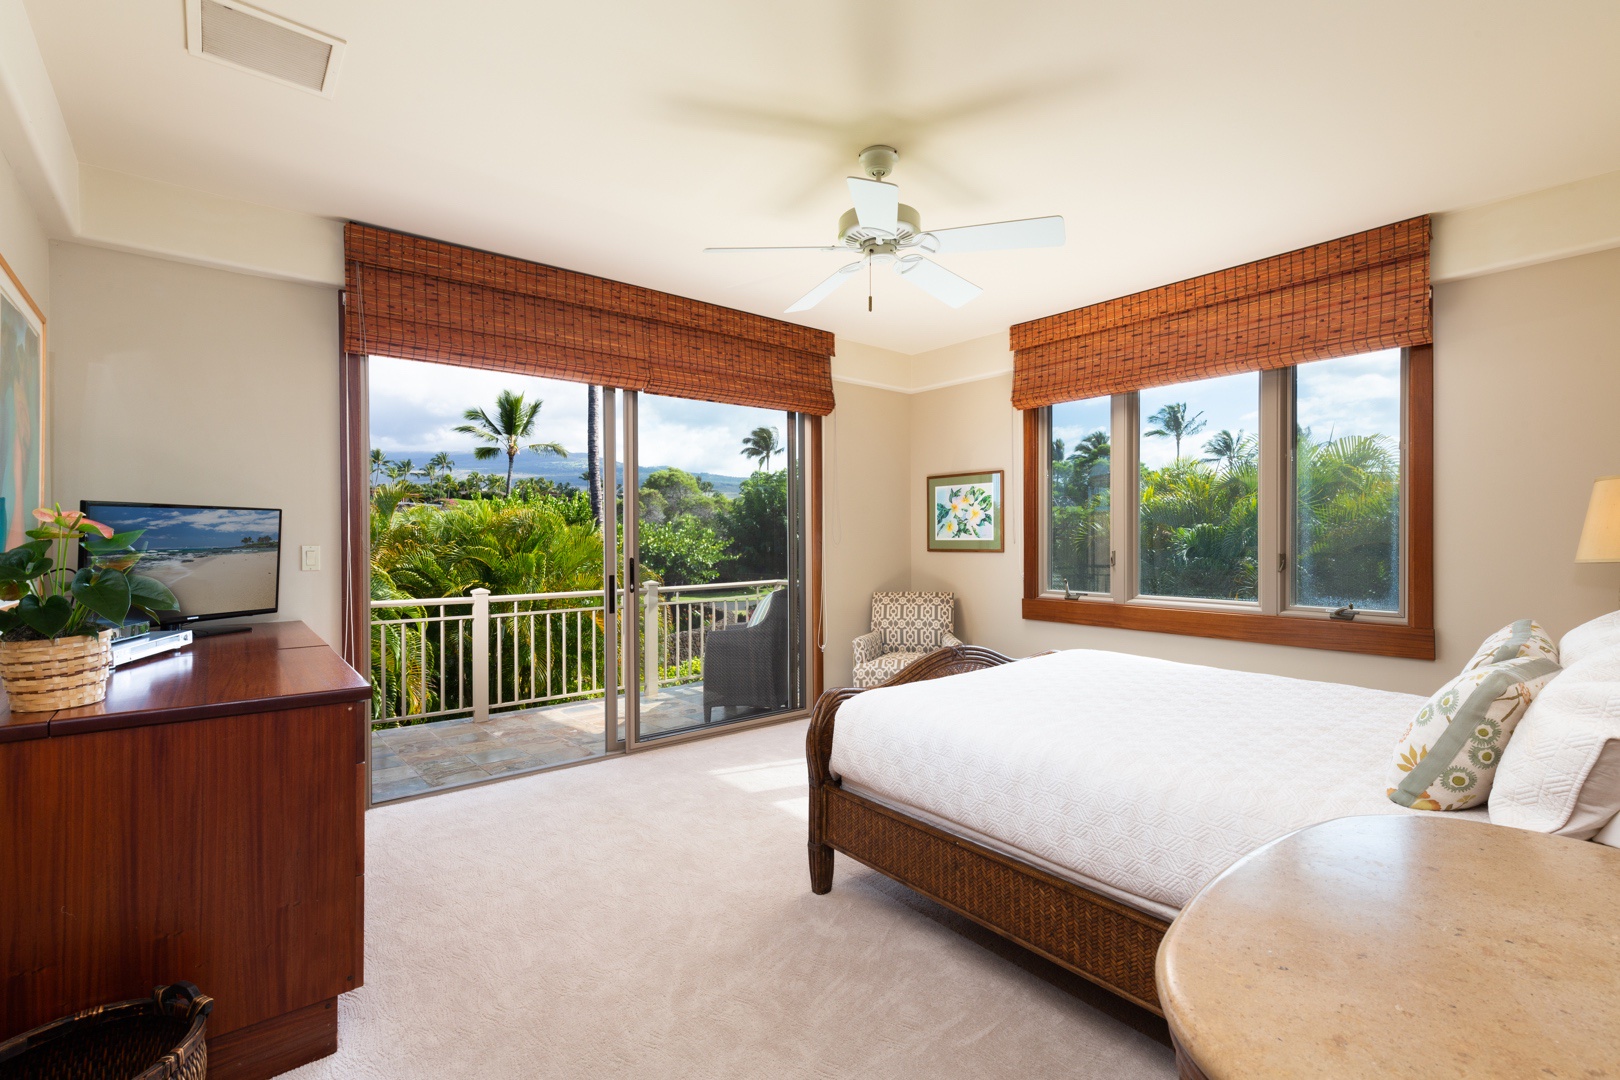 Kailua Kona Vacation Rentals, 3BD Ke Alaula Villa (210A) at Four Seasons Resort at Hualalai - Upper level guest room with queen bed and private balcony with views of Mt. Hualalai.